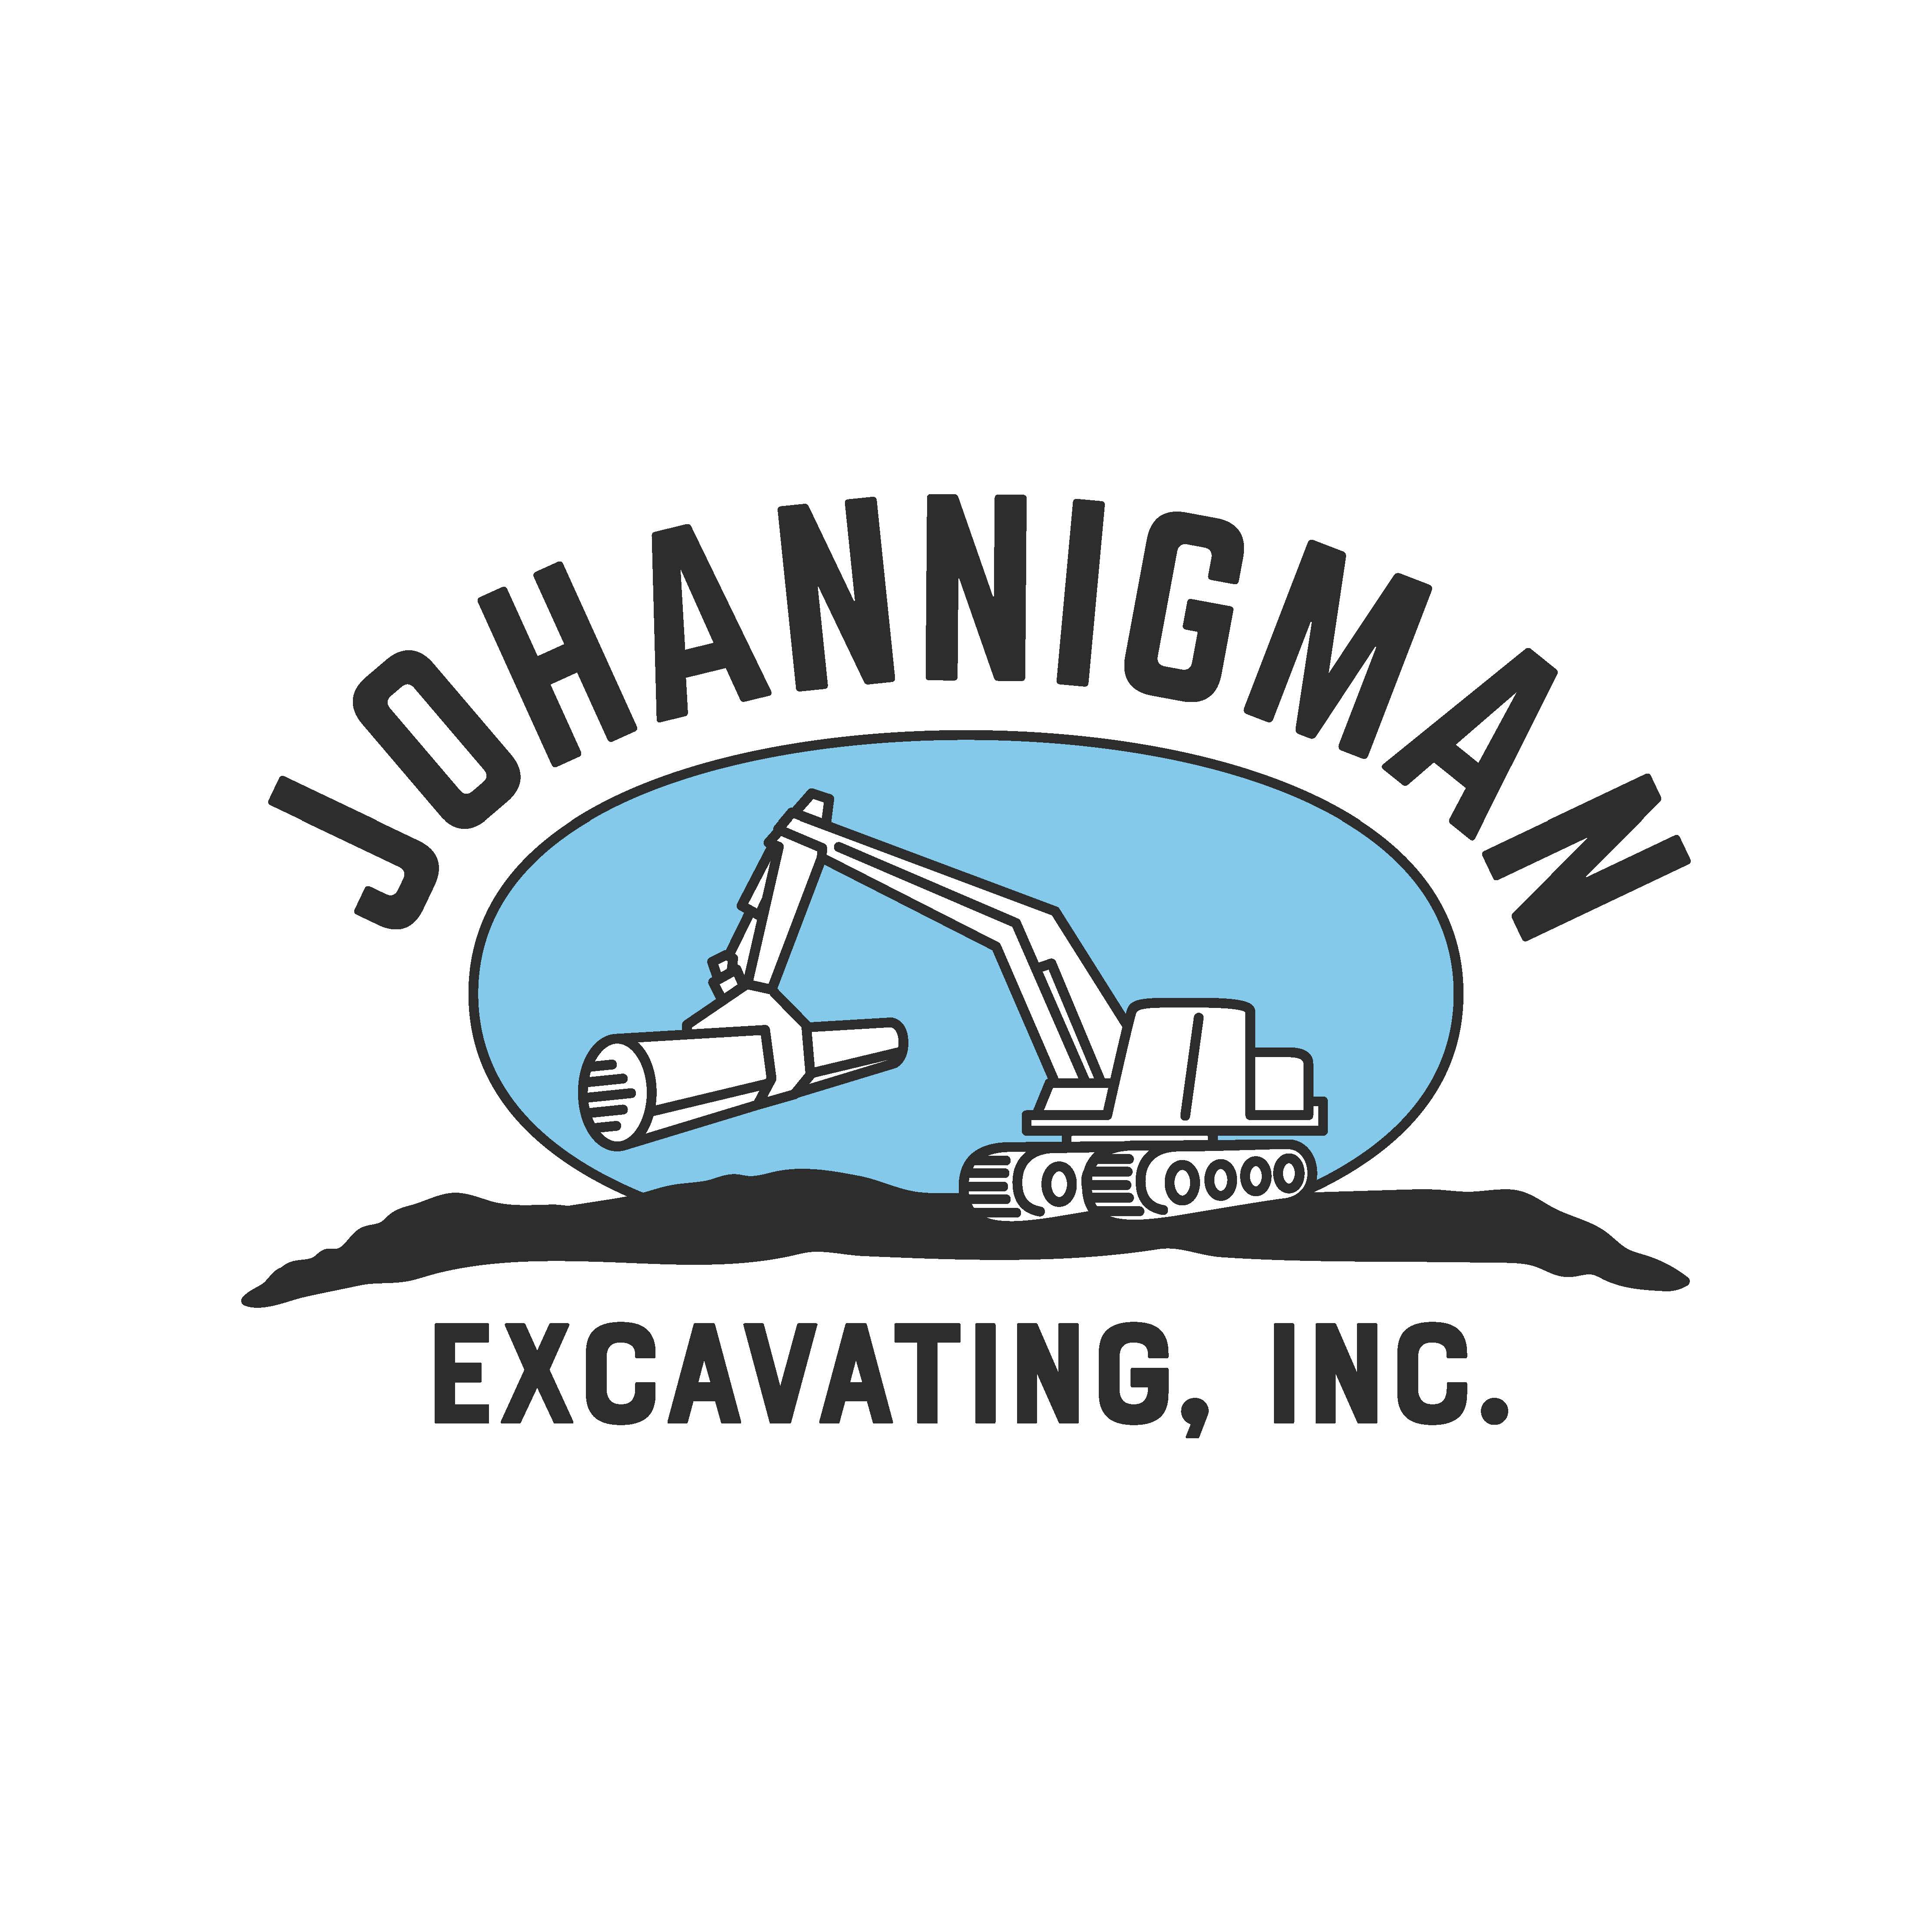 Johannigman Excavating, Inc Logo